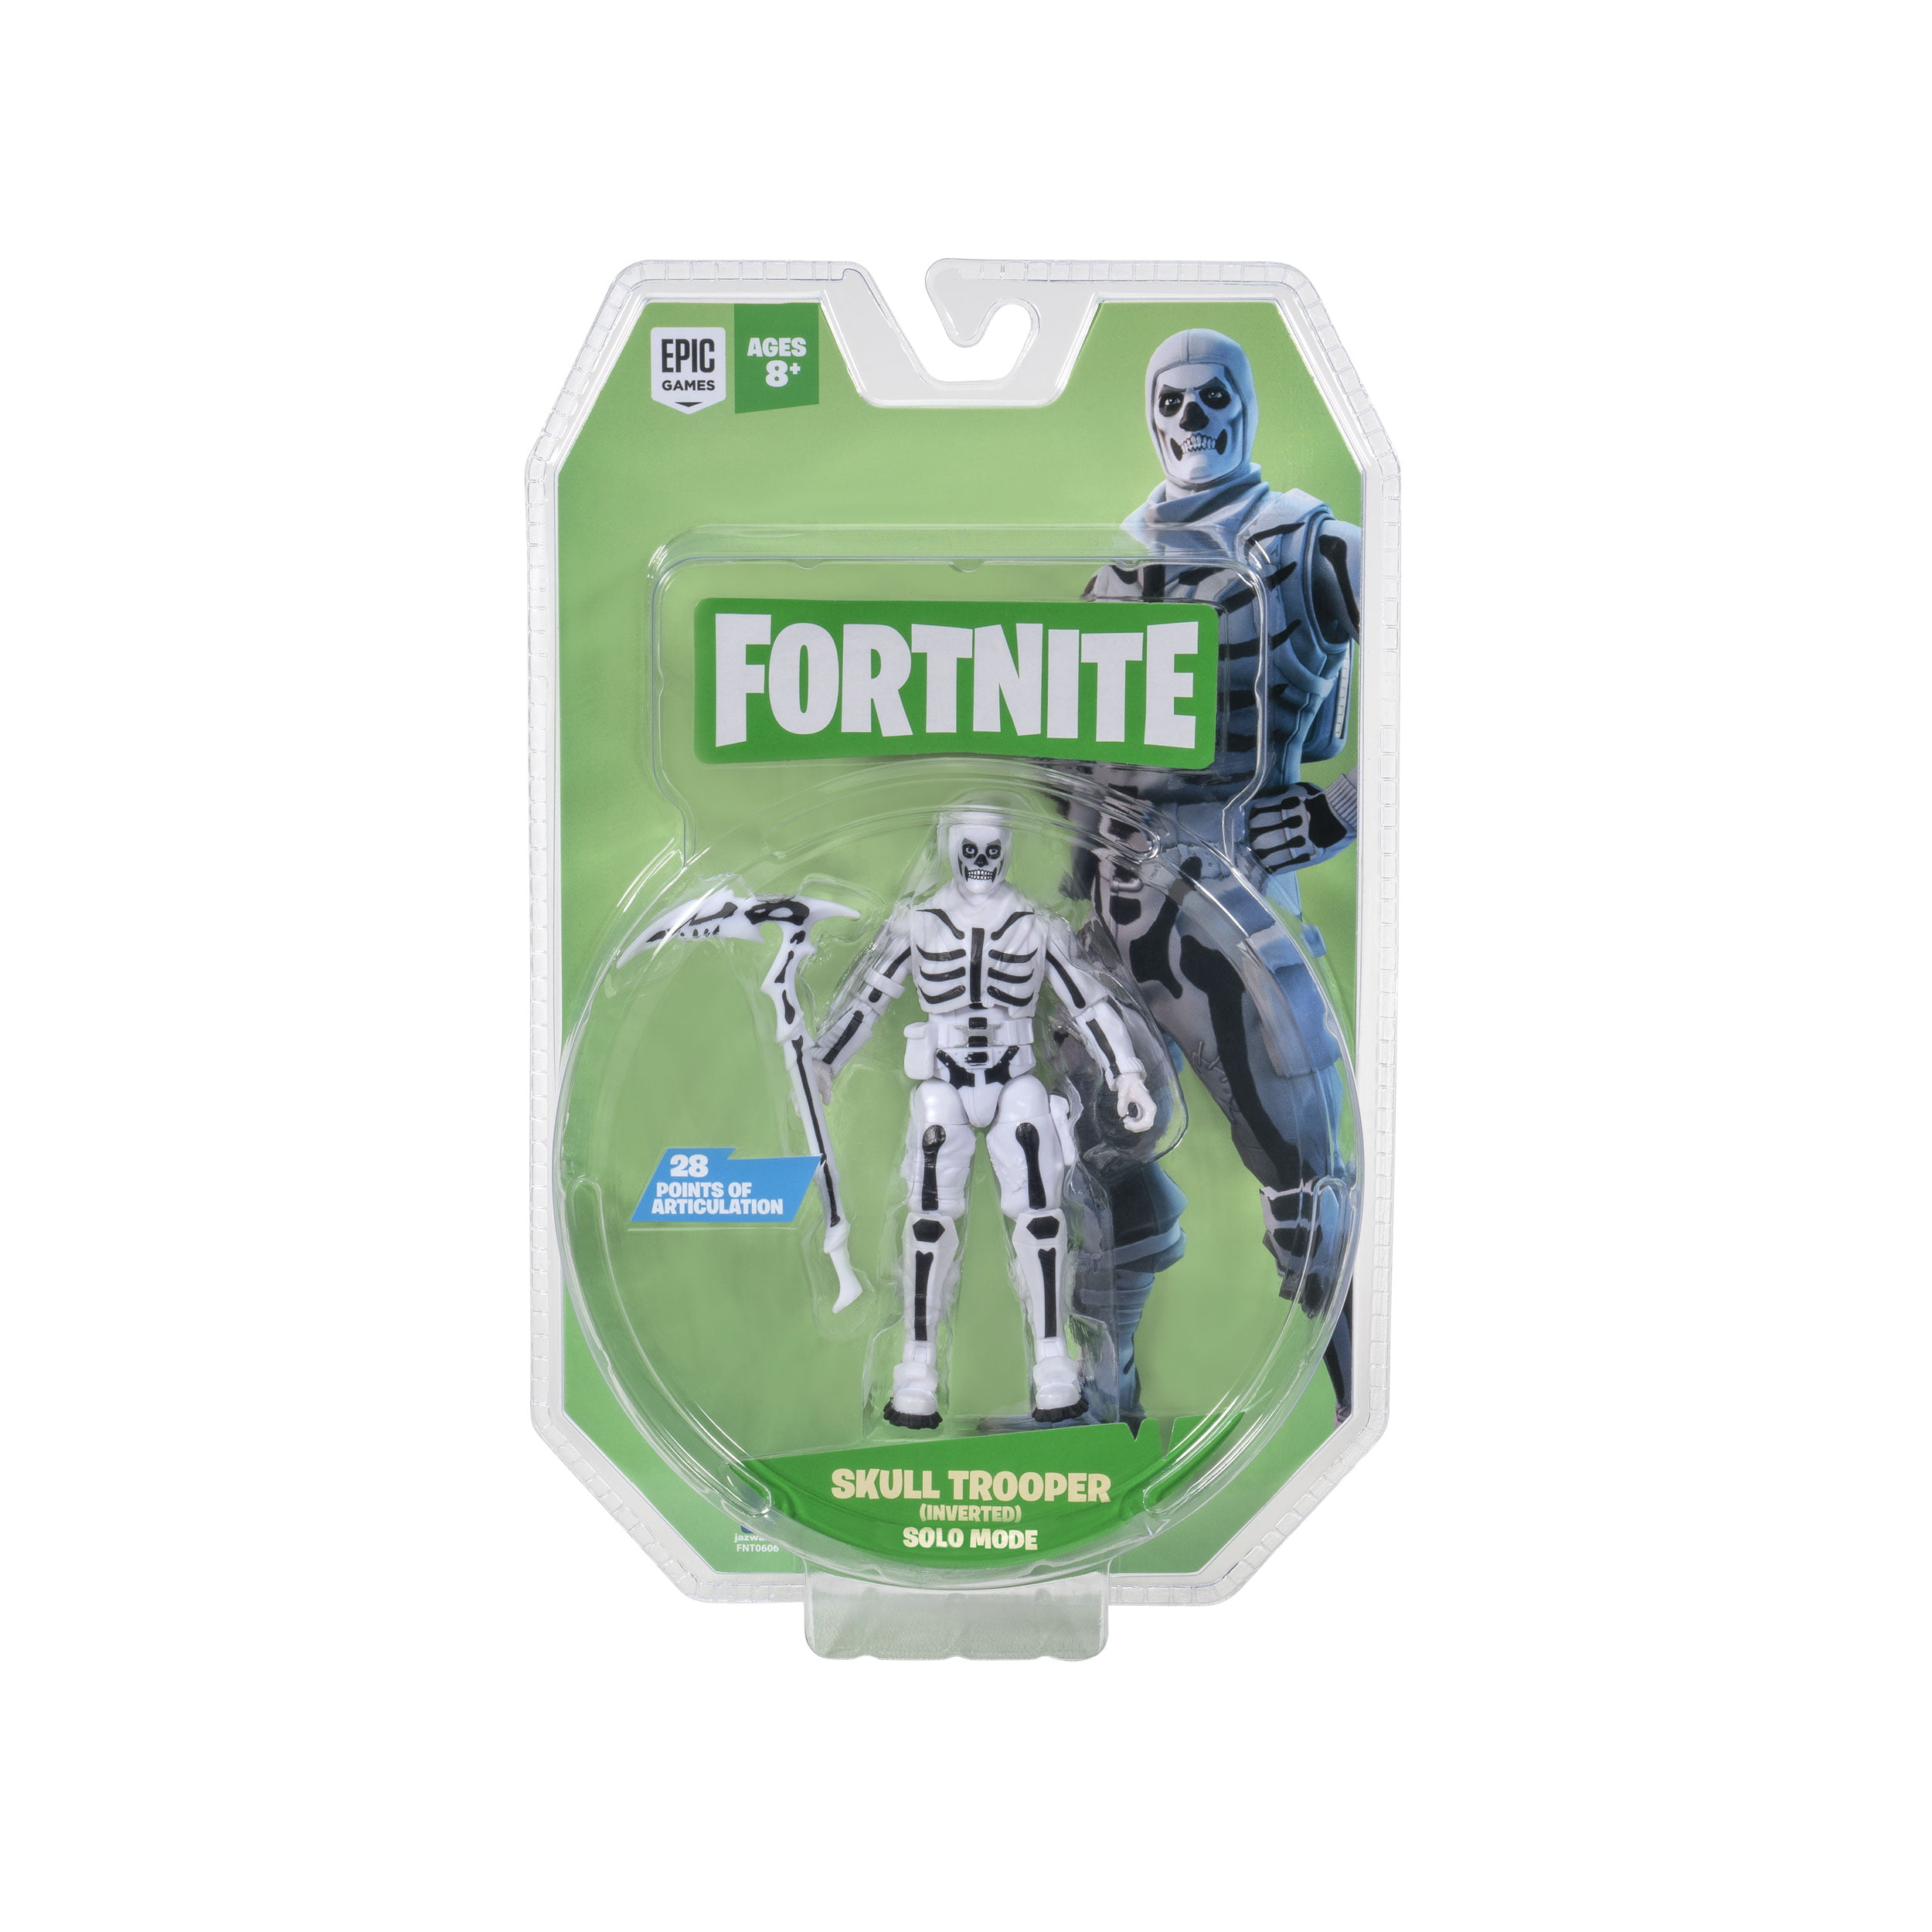 Fortnite Solo Mode Core Figure 1 Figure Pack Skull Trooper - Inverted